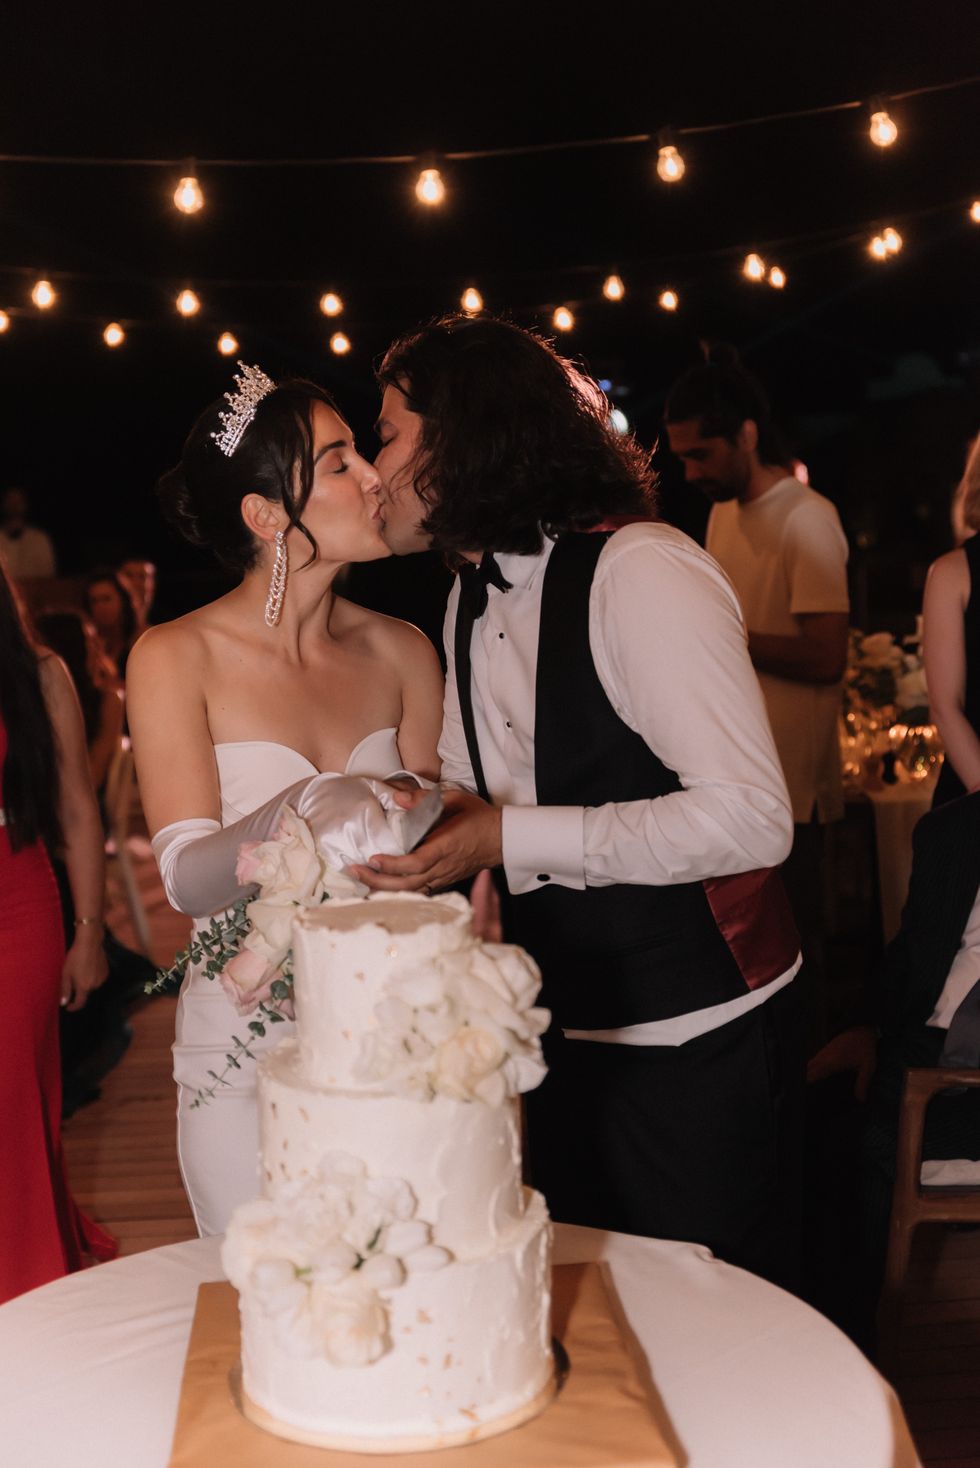 bride and groom slicing cake at wedding